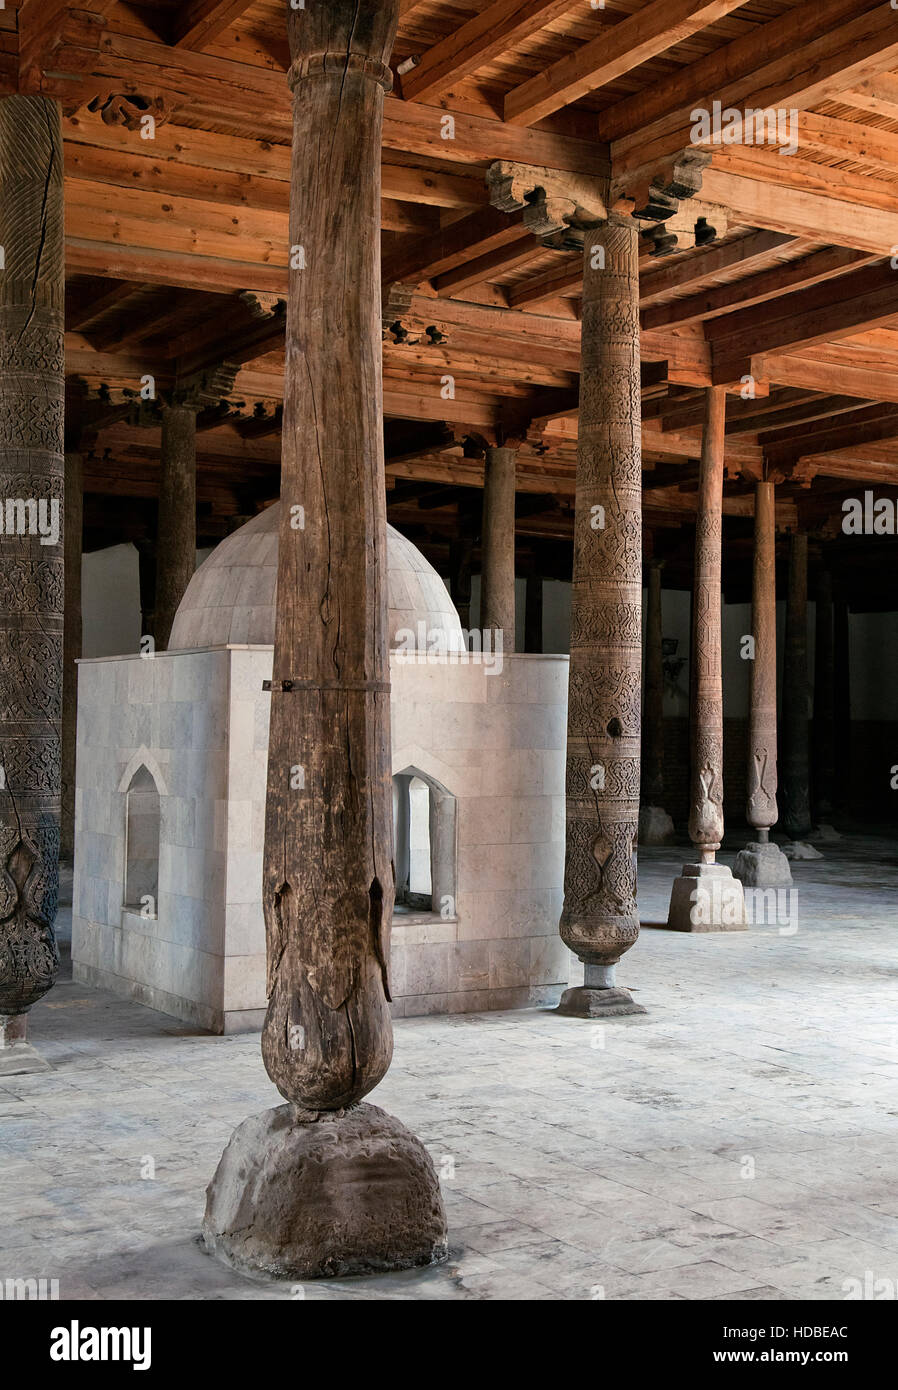 Friday - Djuma - mosque with wooden columns, Khiva, Uzbekistan Stock Photo